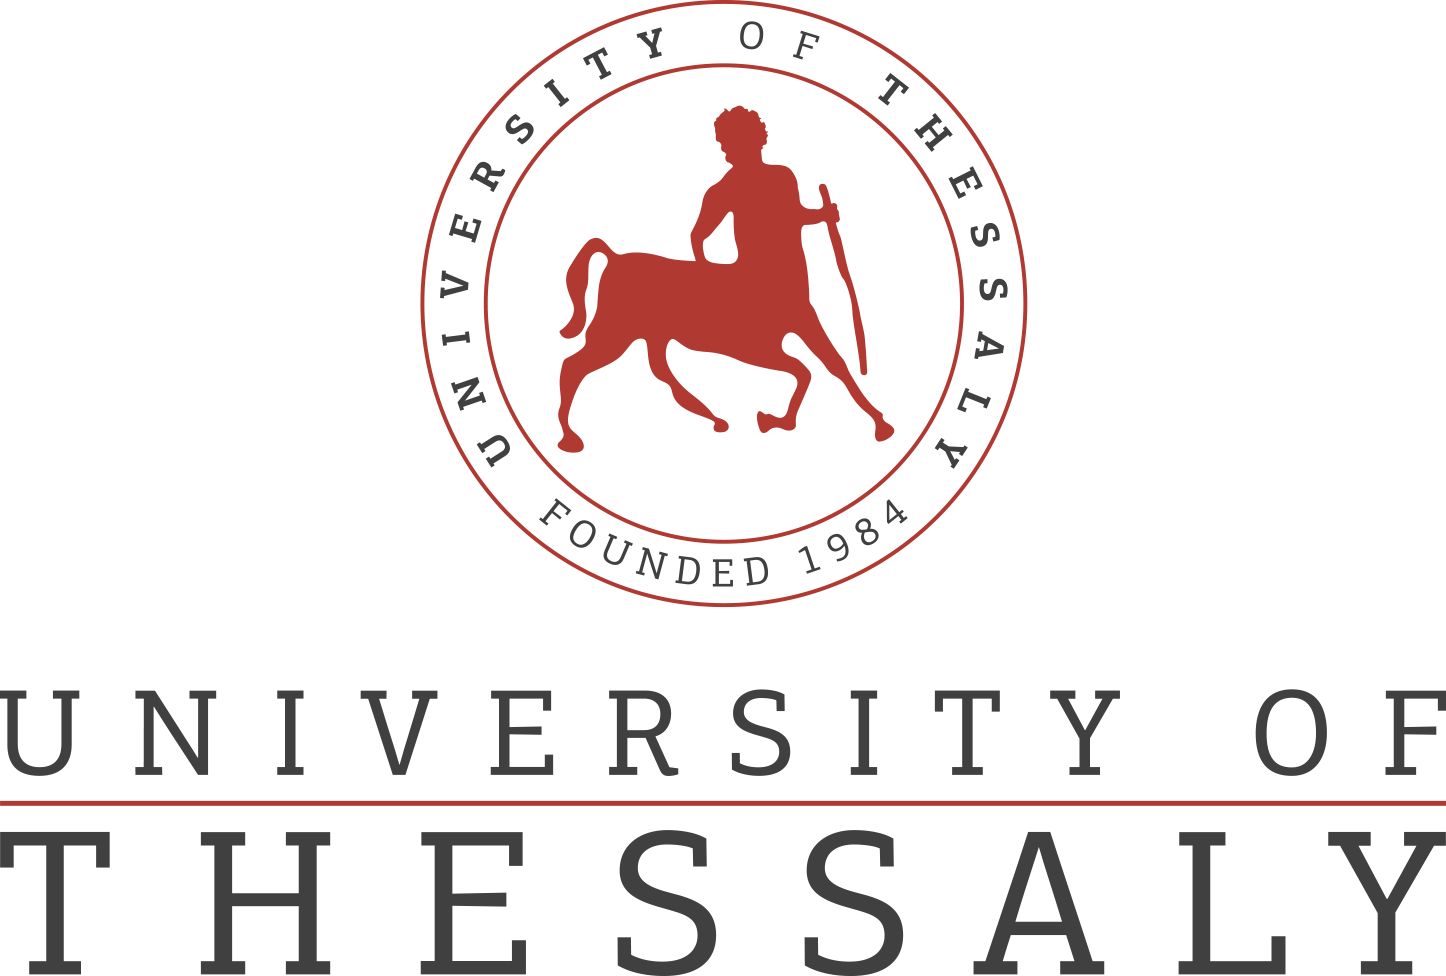 University of Thessaly (UTH, Greece)